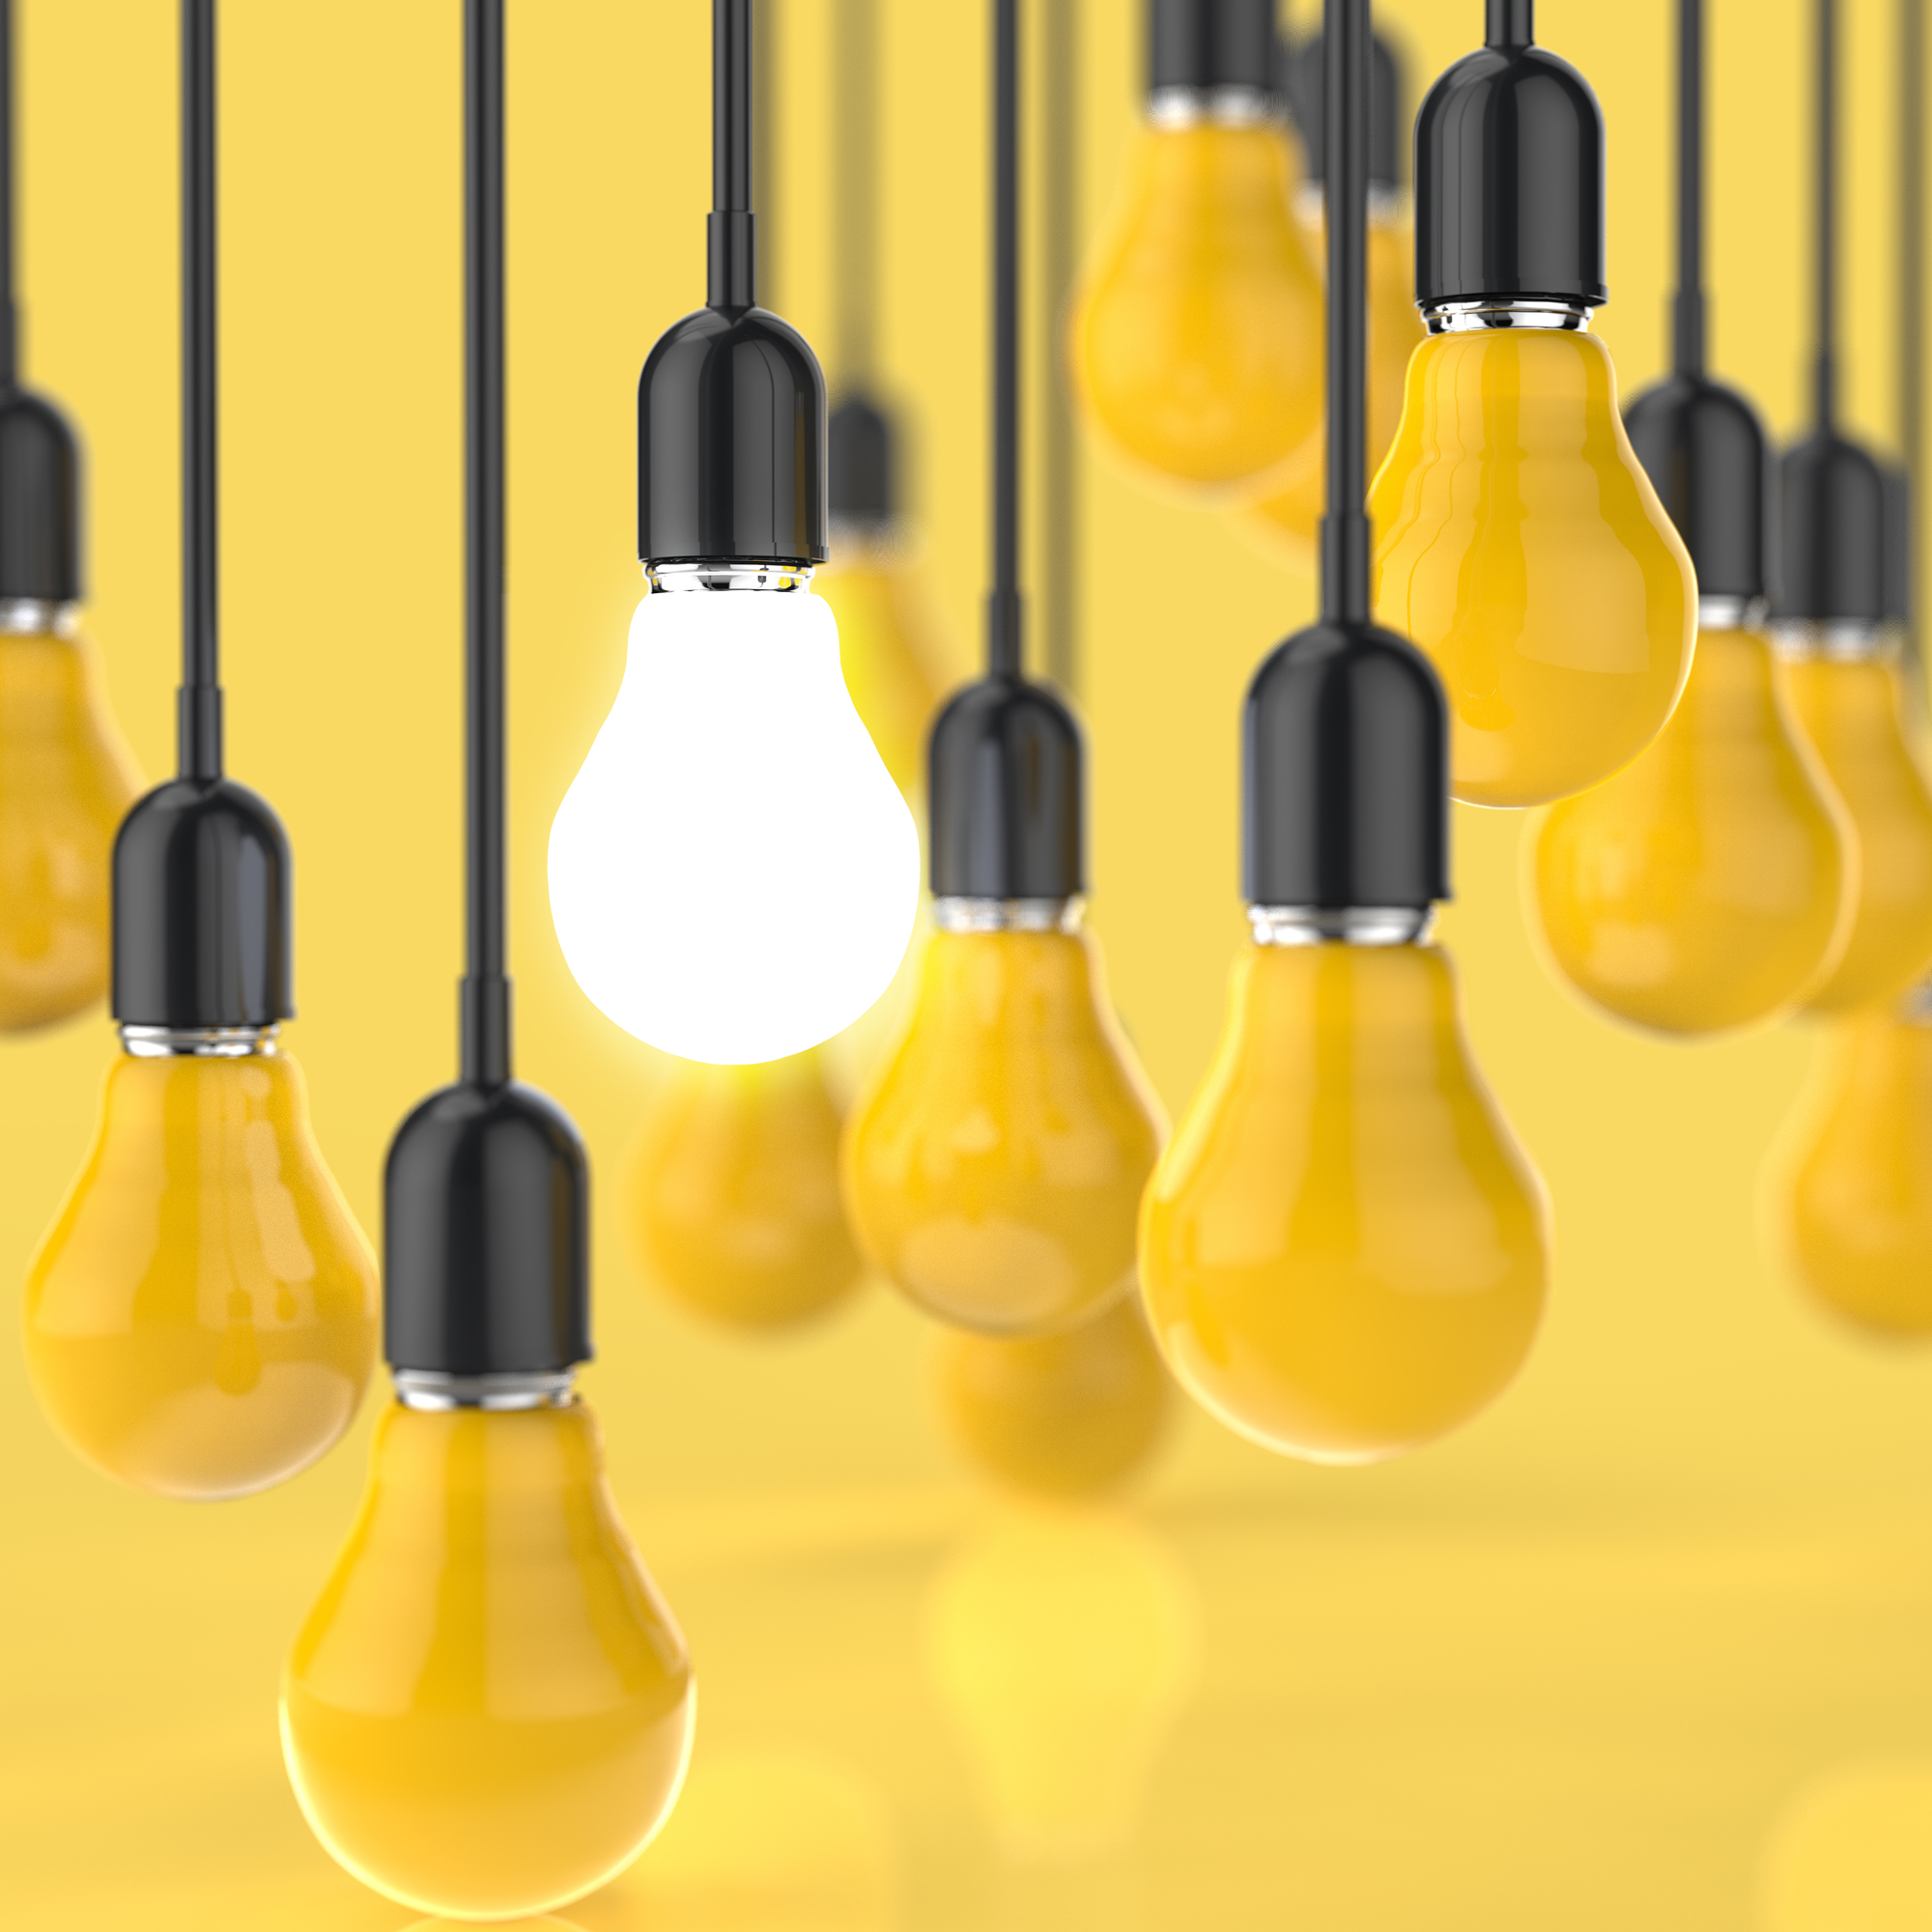 Light bulbs on yellow background